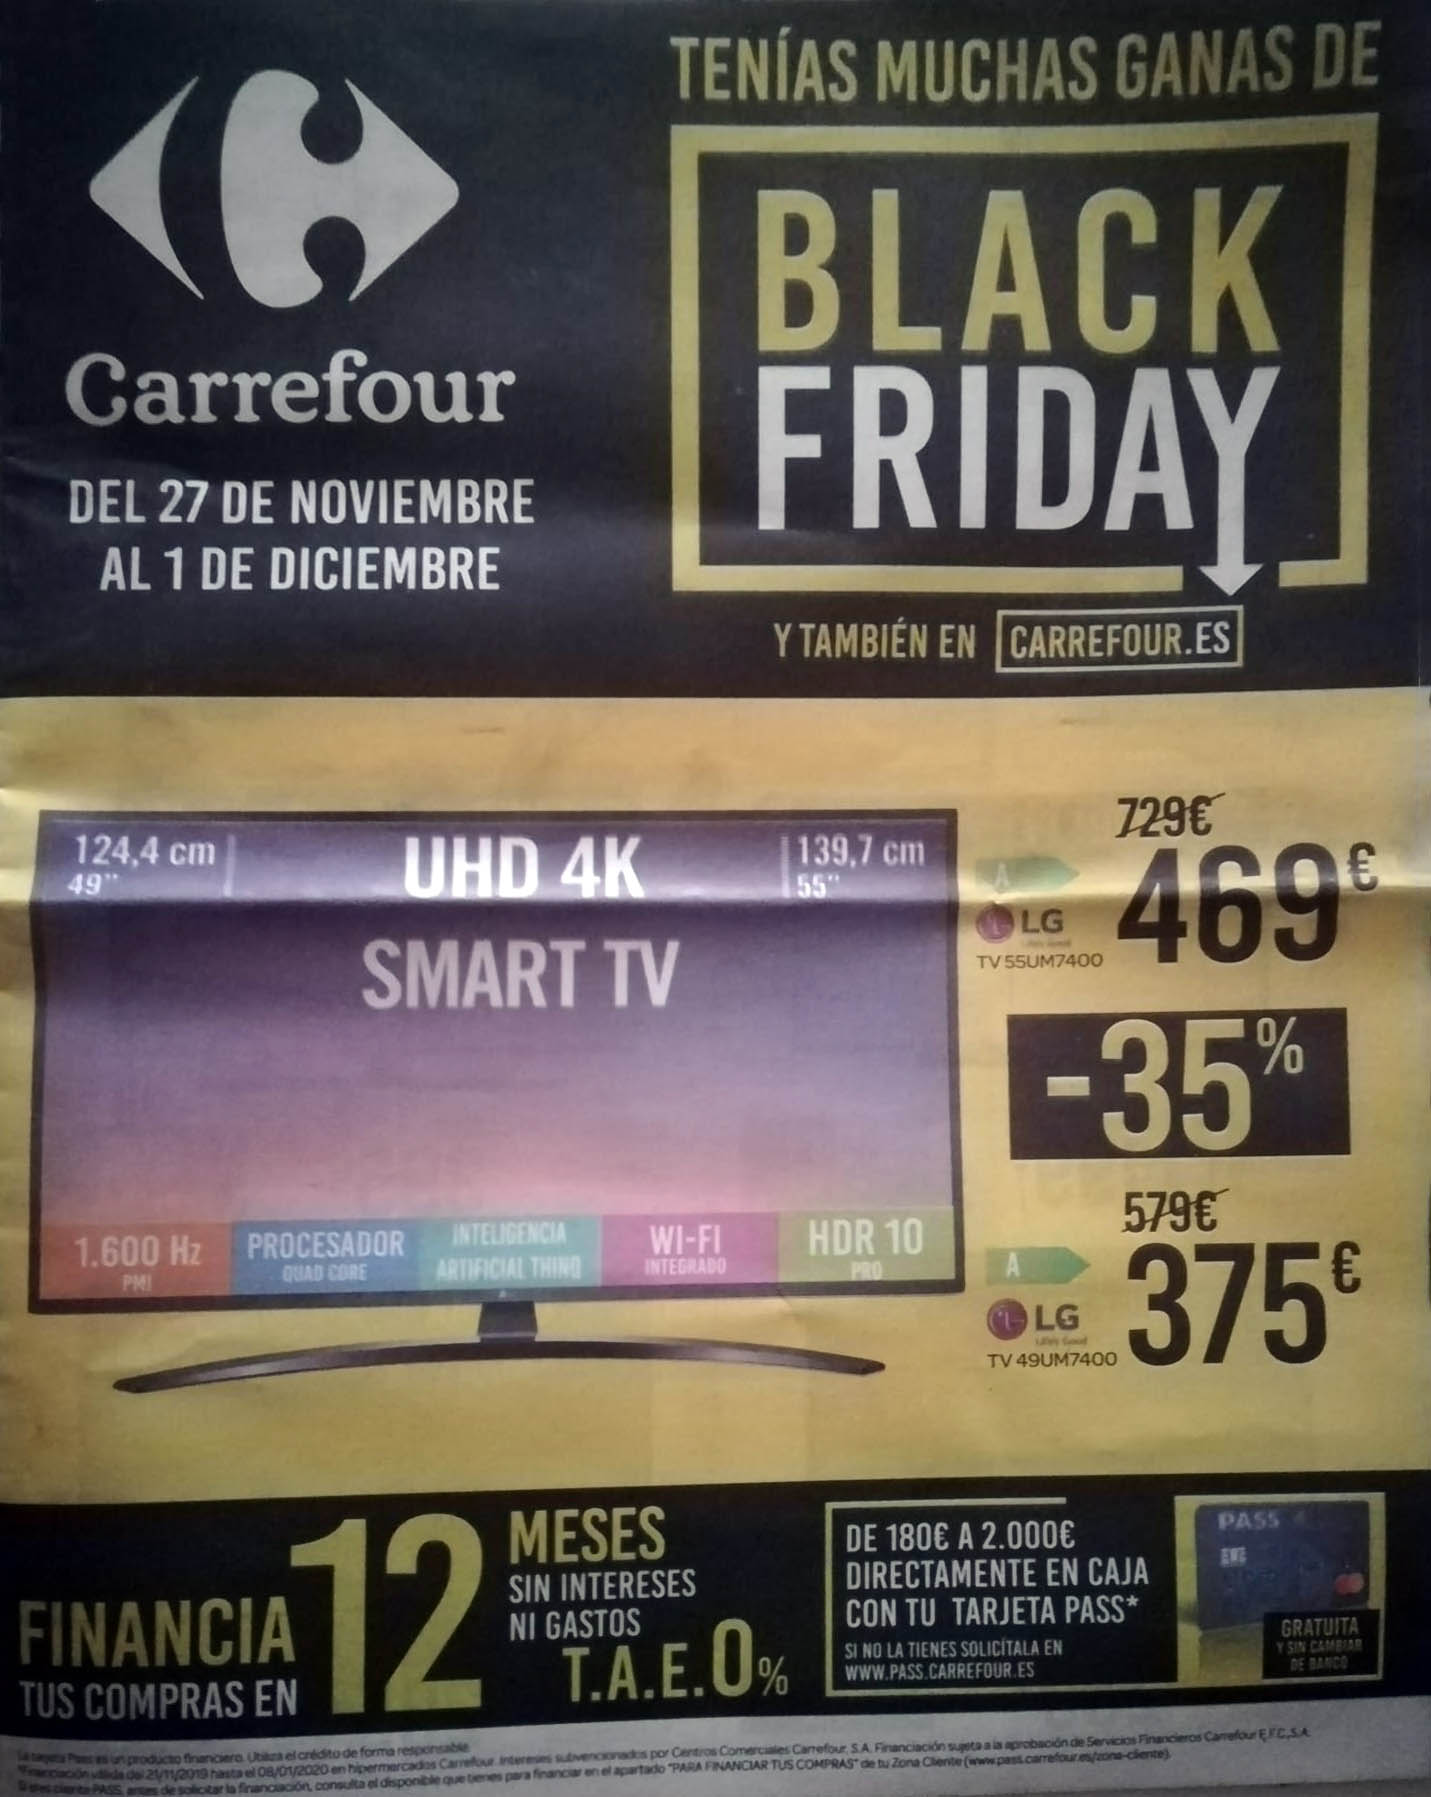 Friday Carrefour Juguetes Clearance, GET 54% OFF, www.chapelpress.com